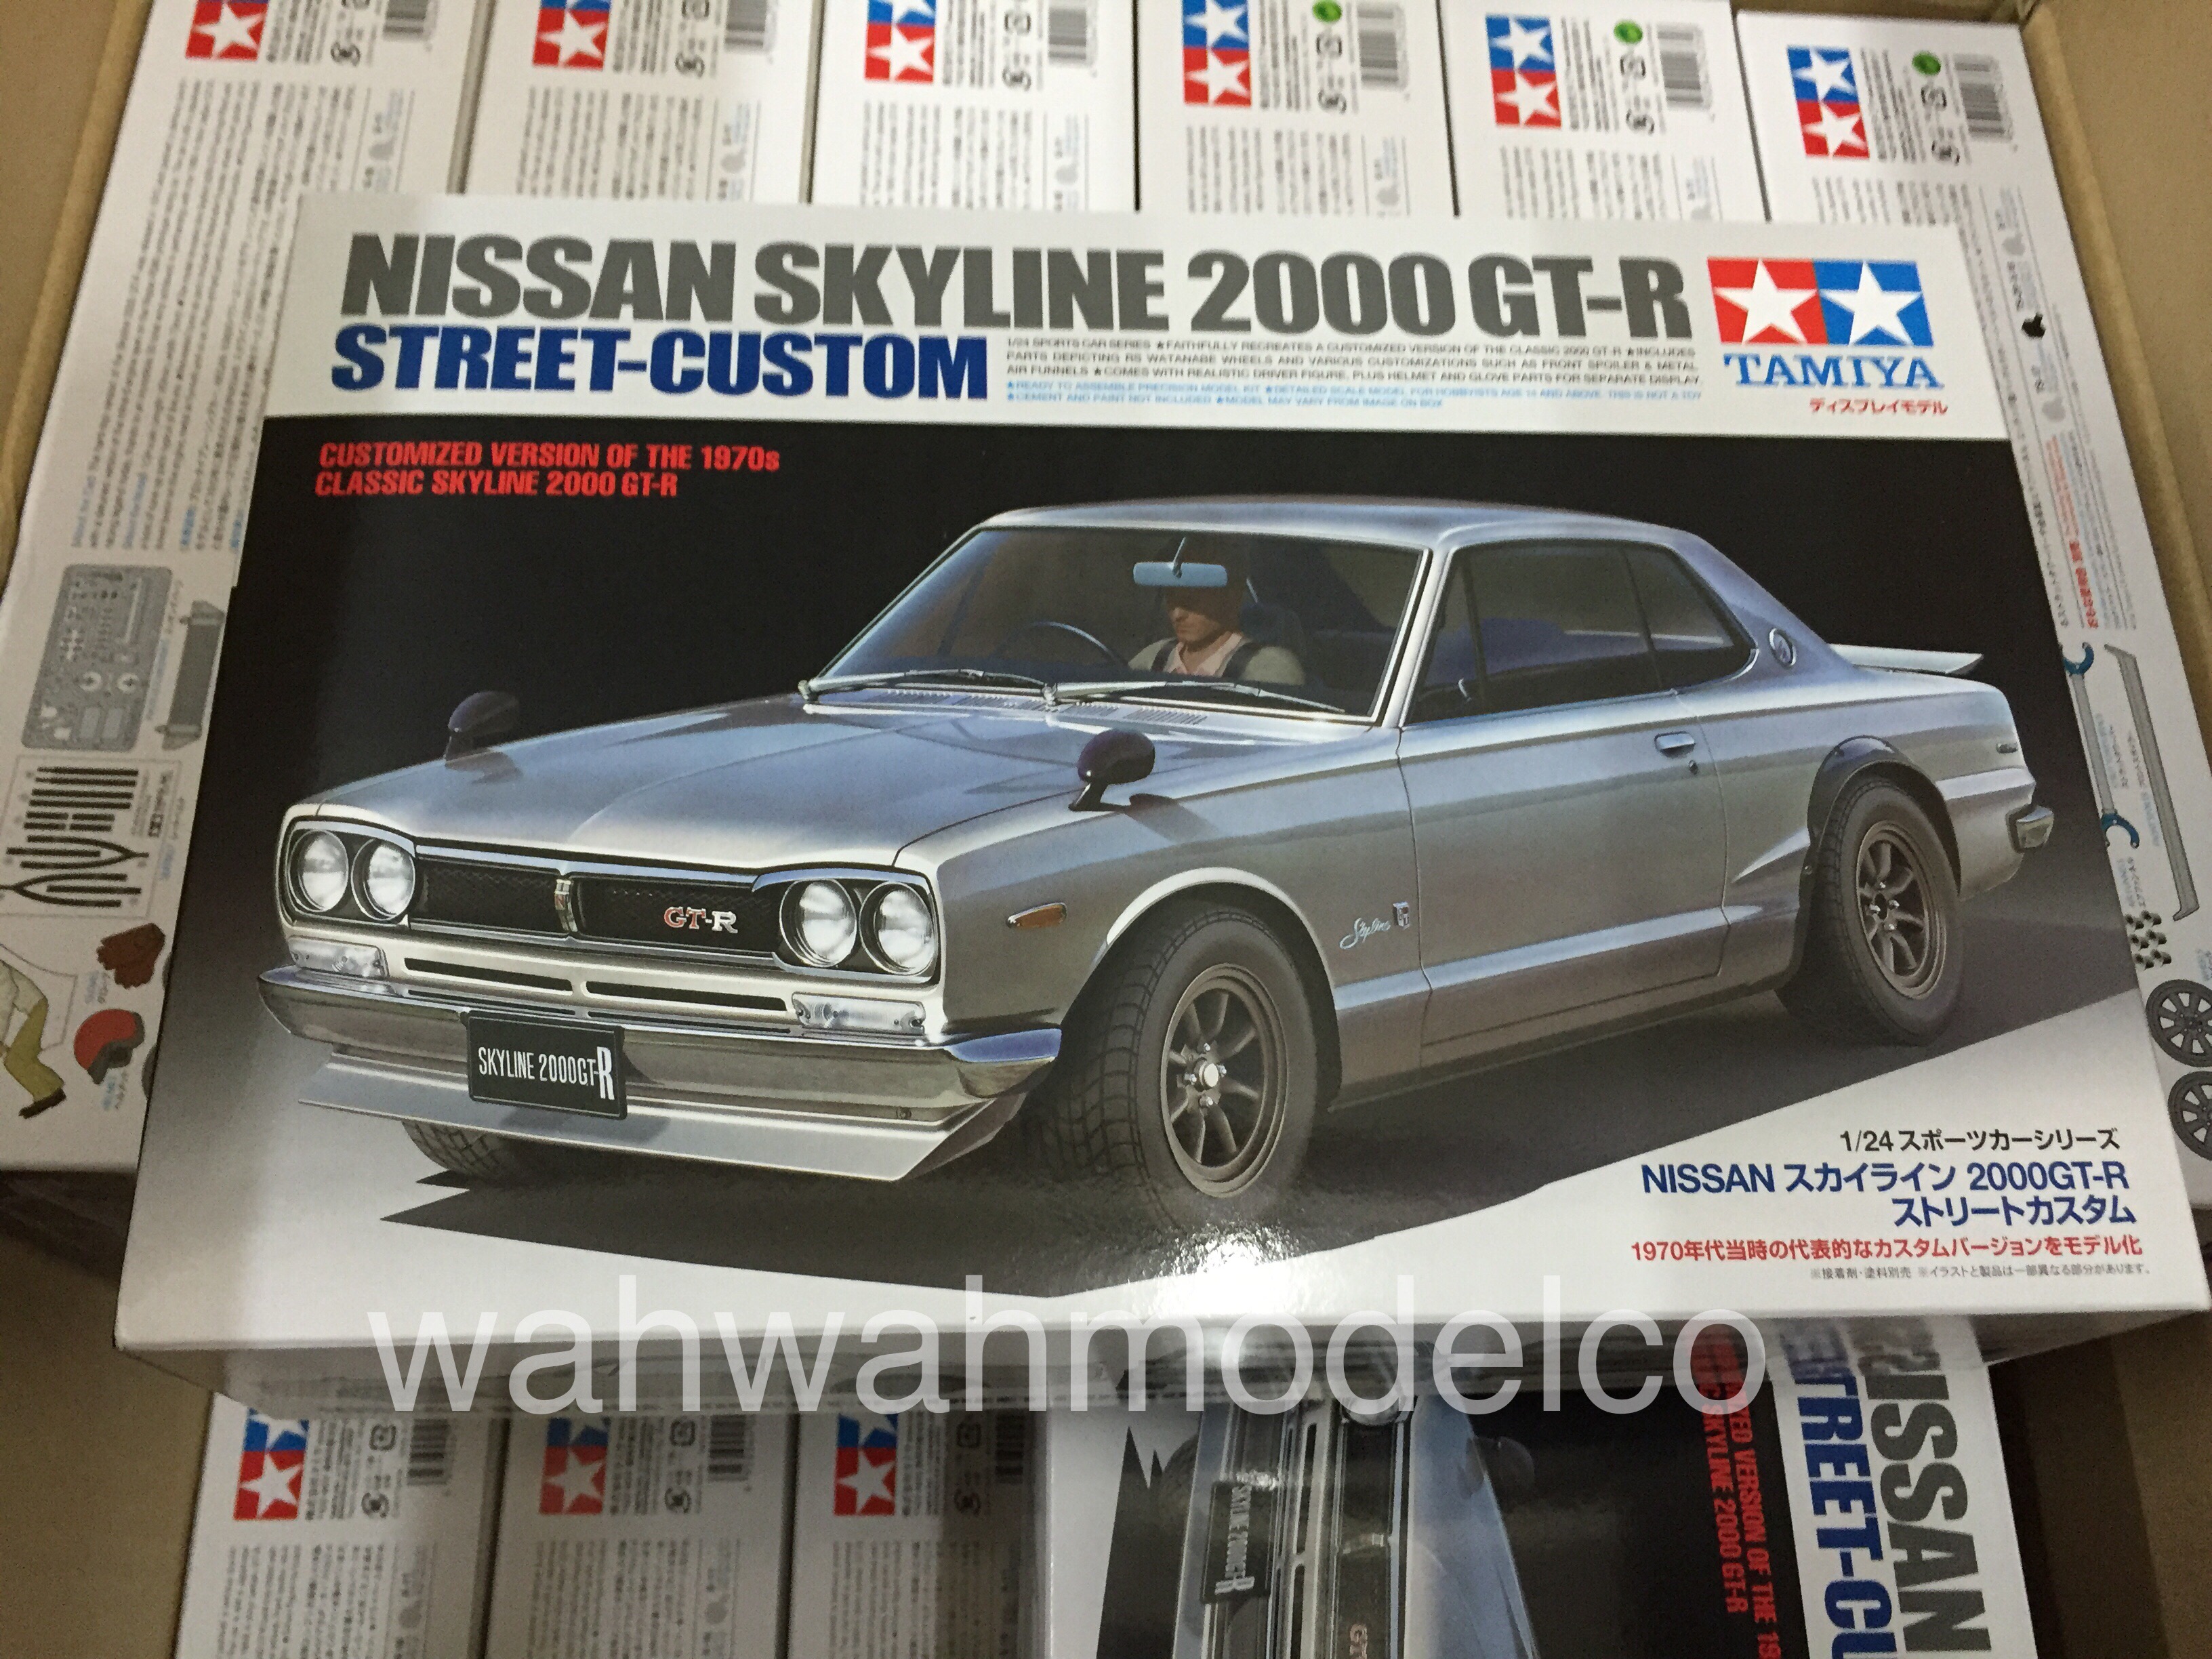 Tamiya 24335 1 24 Nissan Skyline 2000 Gt R Street Custom Wah